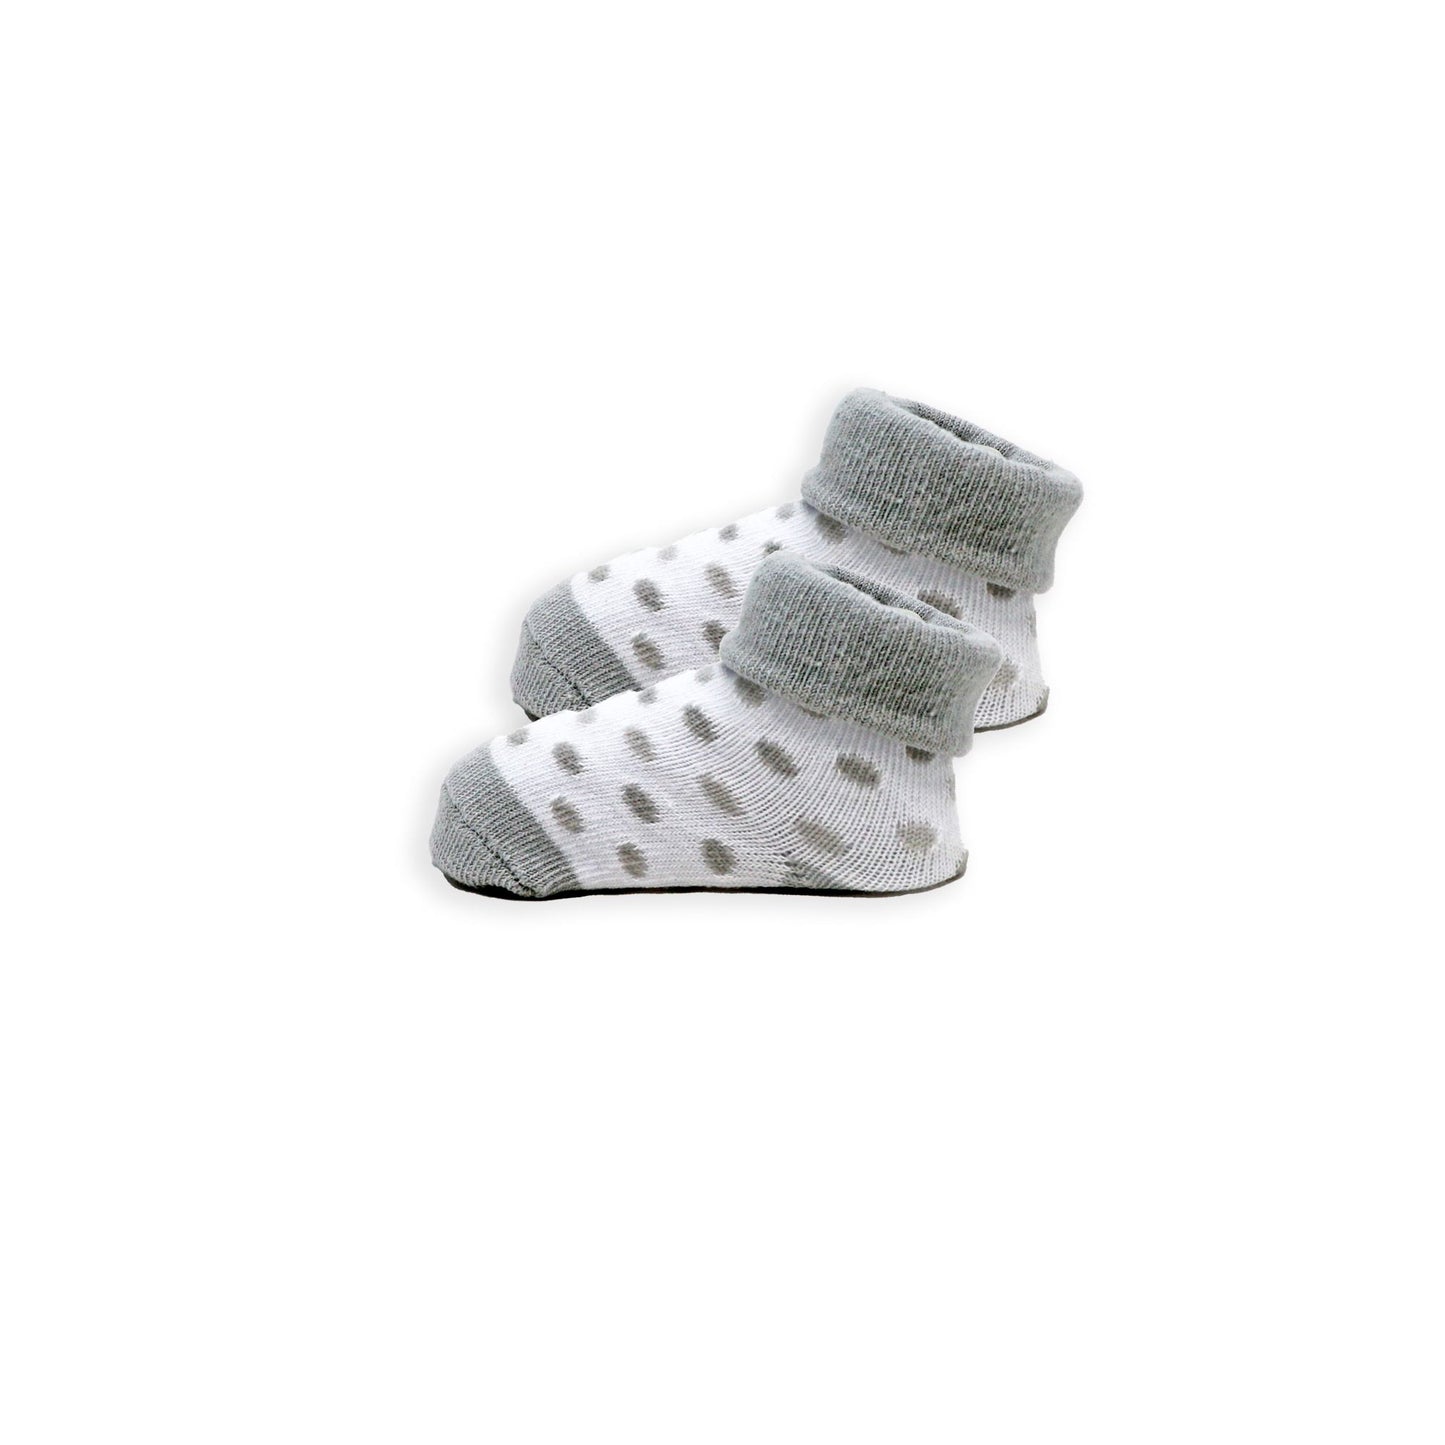 Baby's Socks - 2 Pack Grey